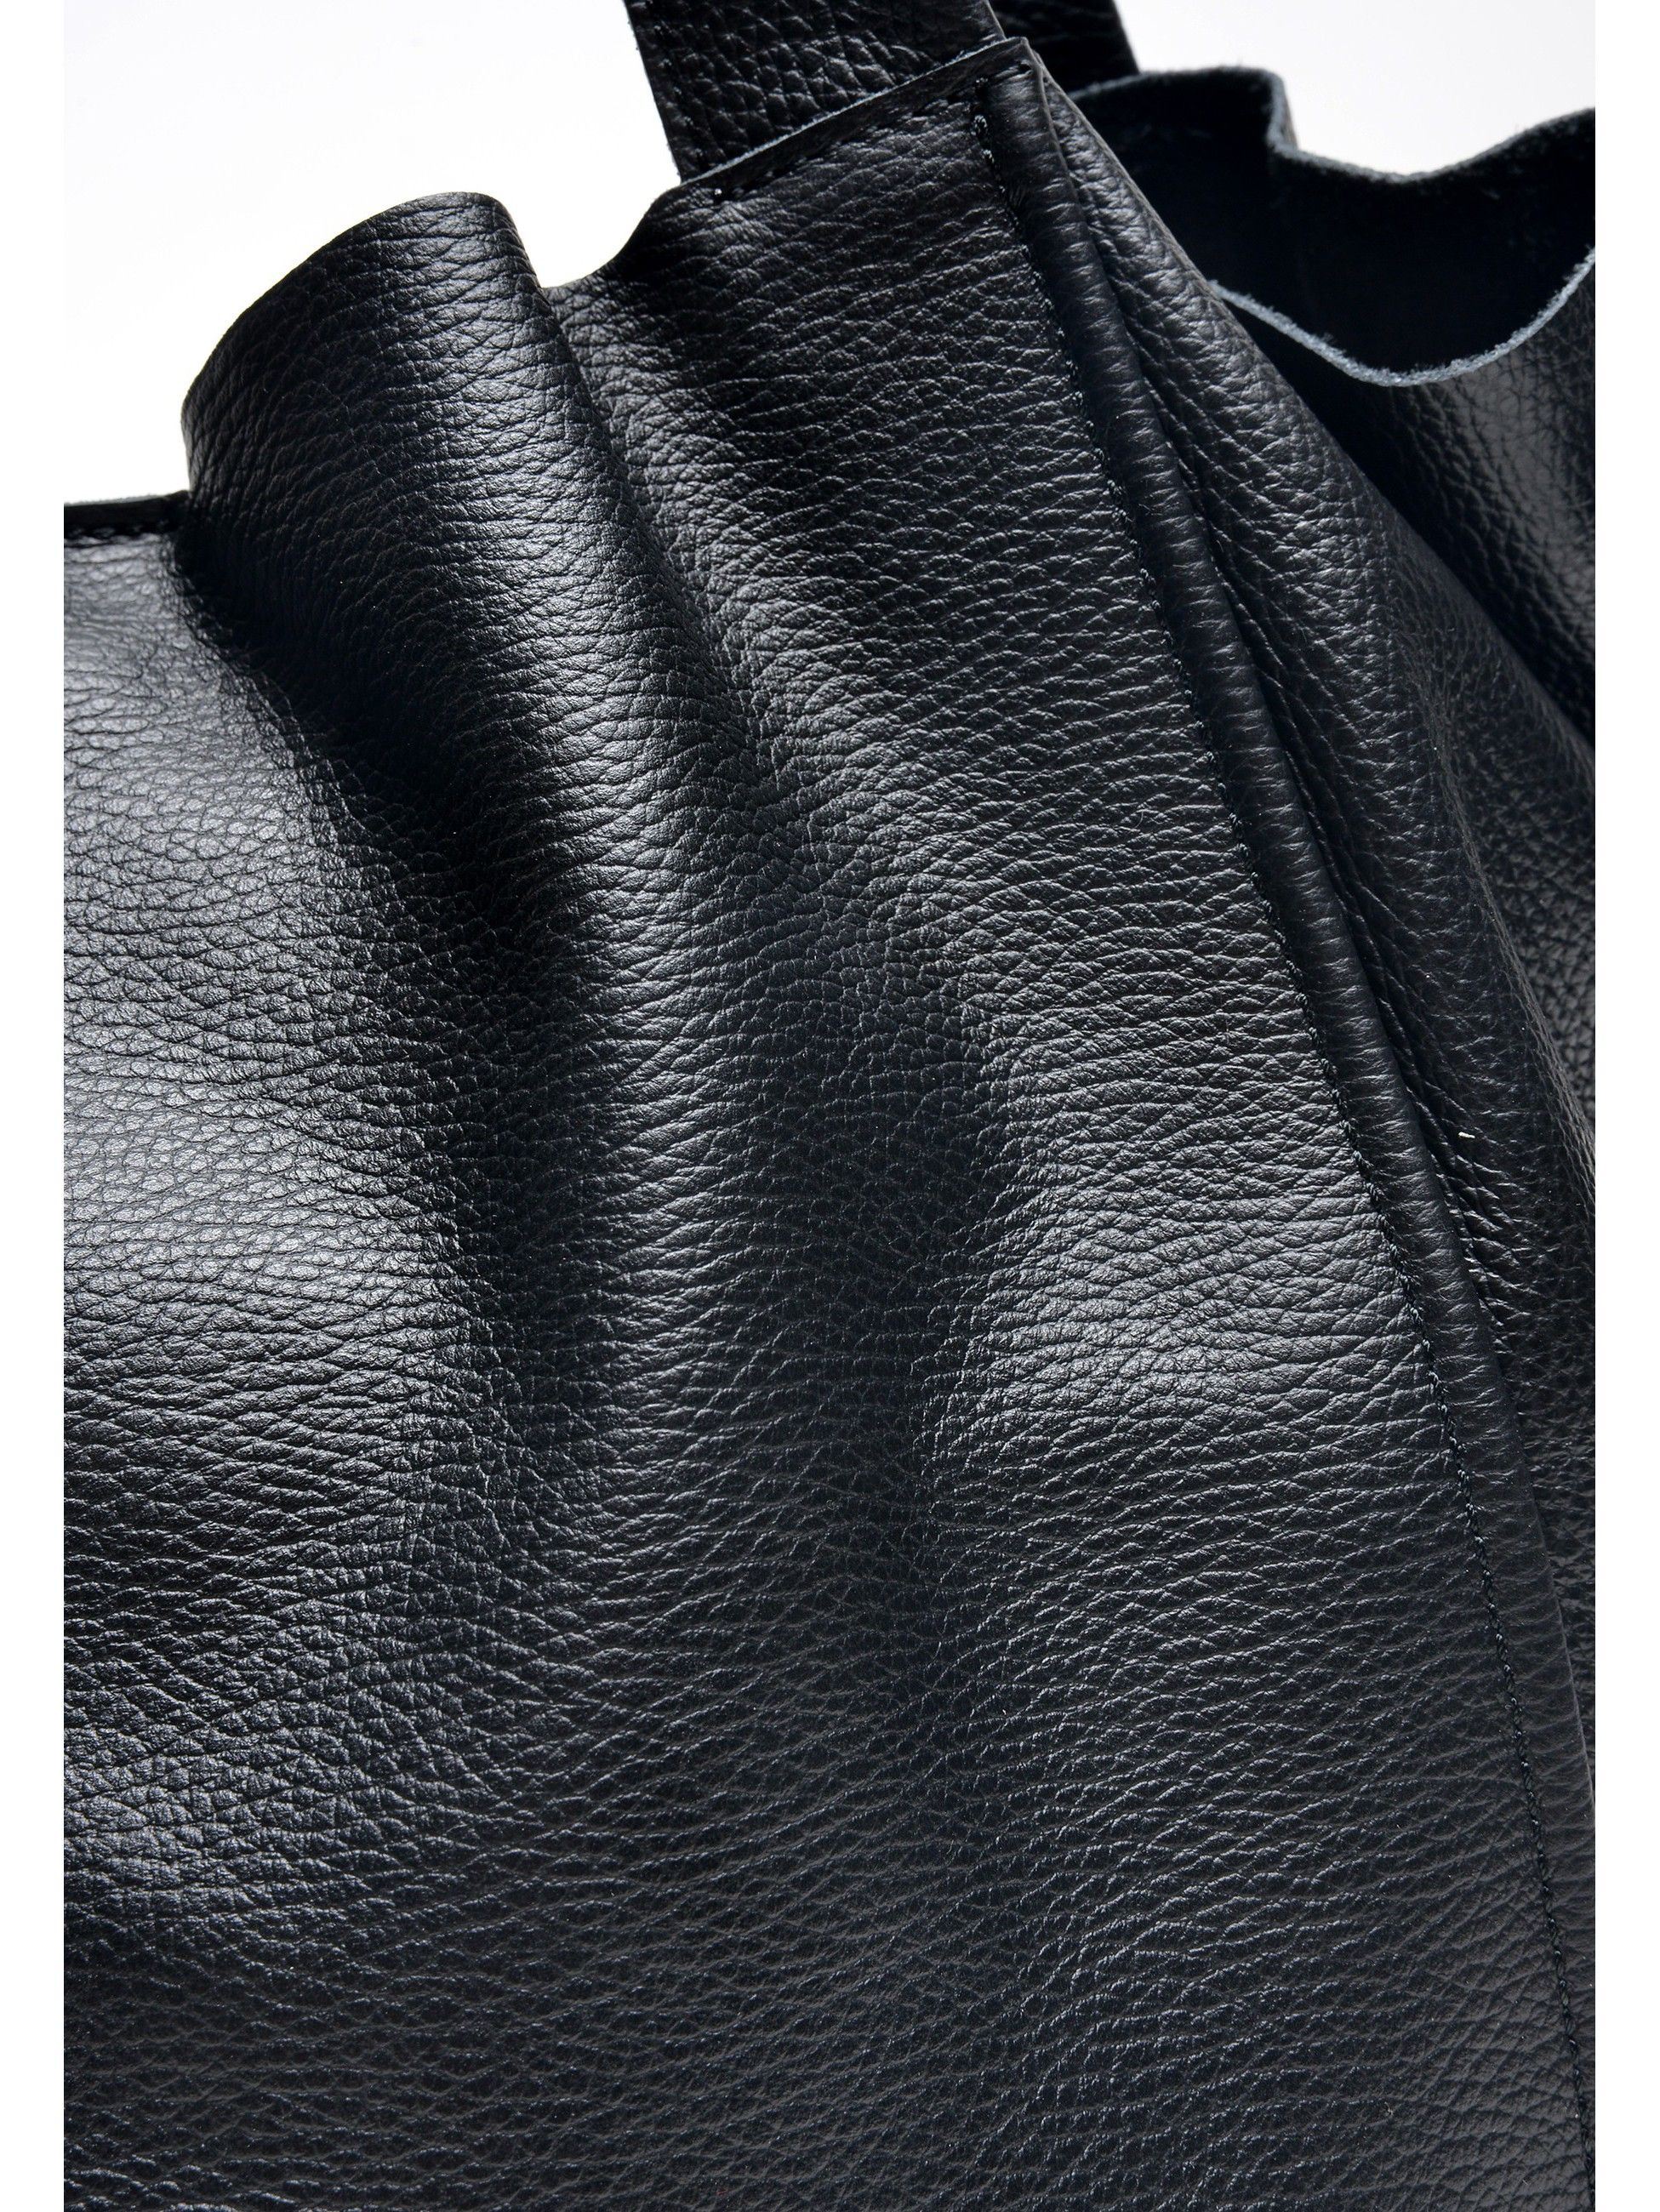 Tote Bag
100% cow leather
Drawstring closure
Inner zipped purse
Front pocket
Dimensions (L):38x54x19cm
Handle: 52 cm non adjustable
Shoulder strap: /